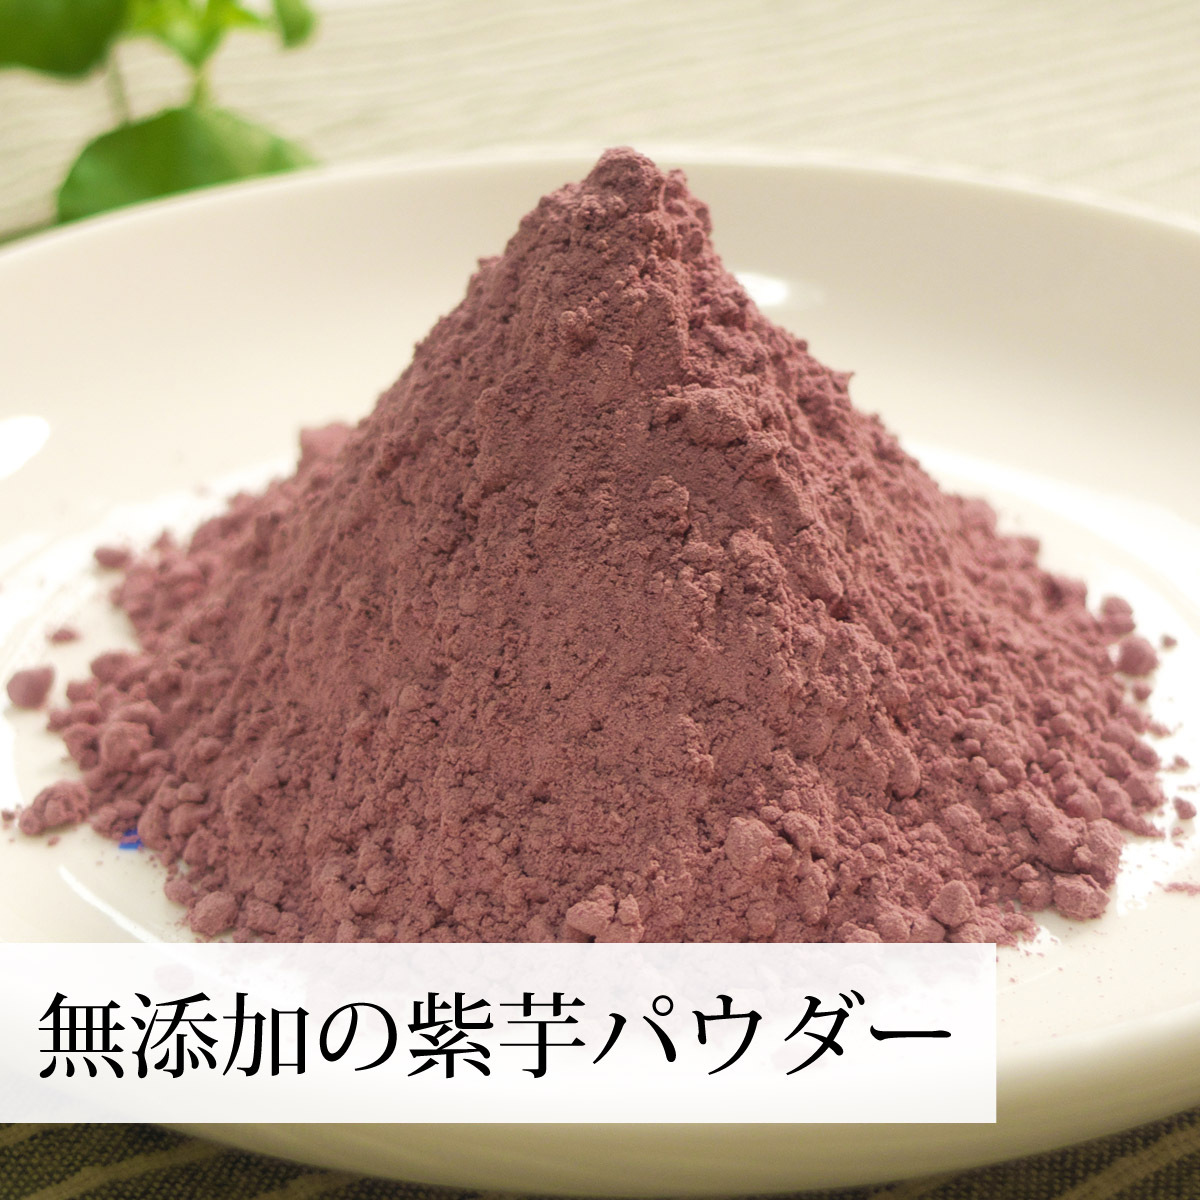  purple corm powder 1kg purple .. powder business use ...... no addition domestic production 